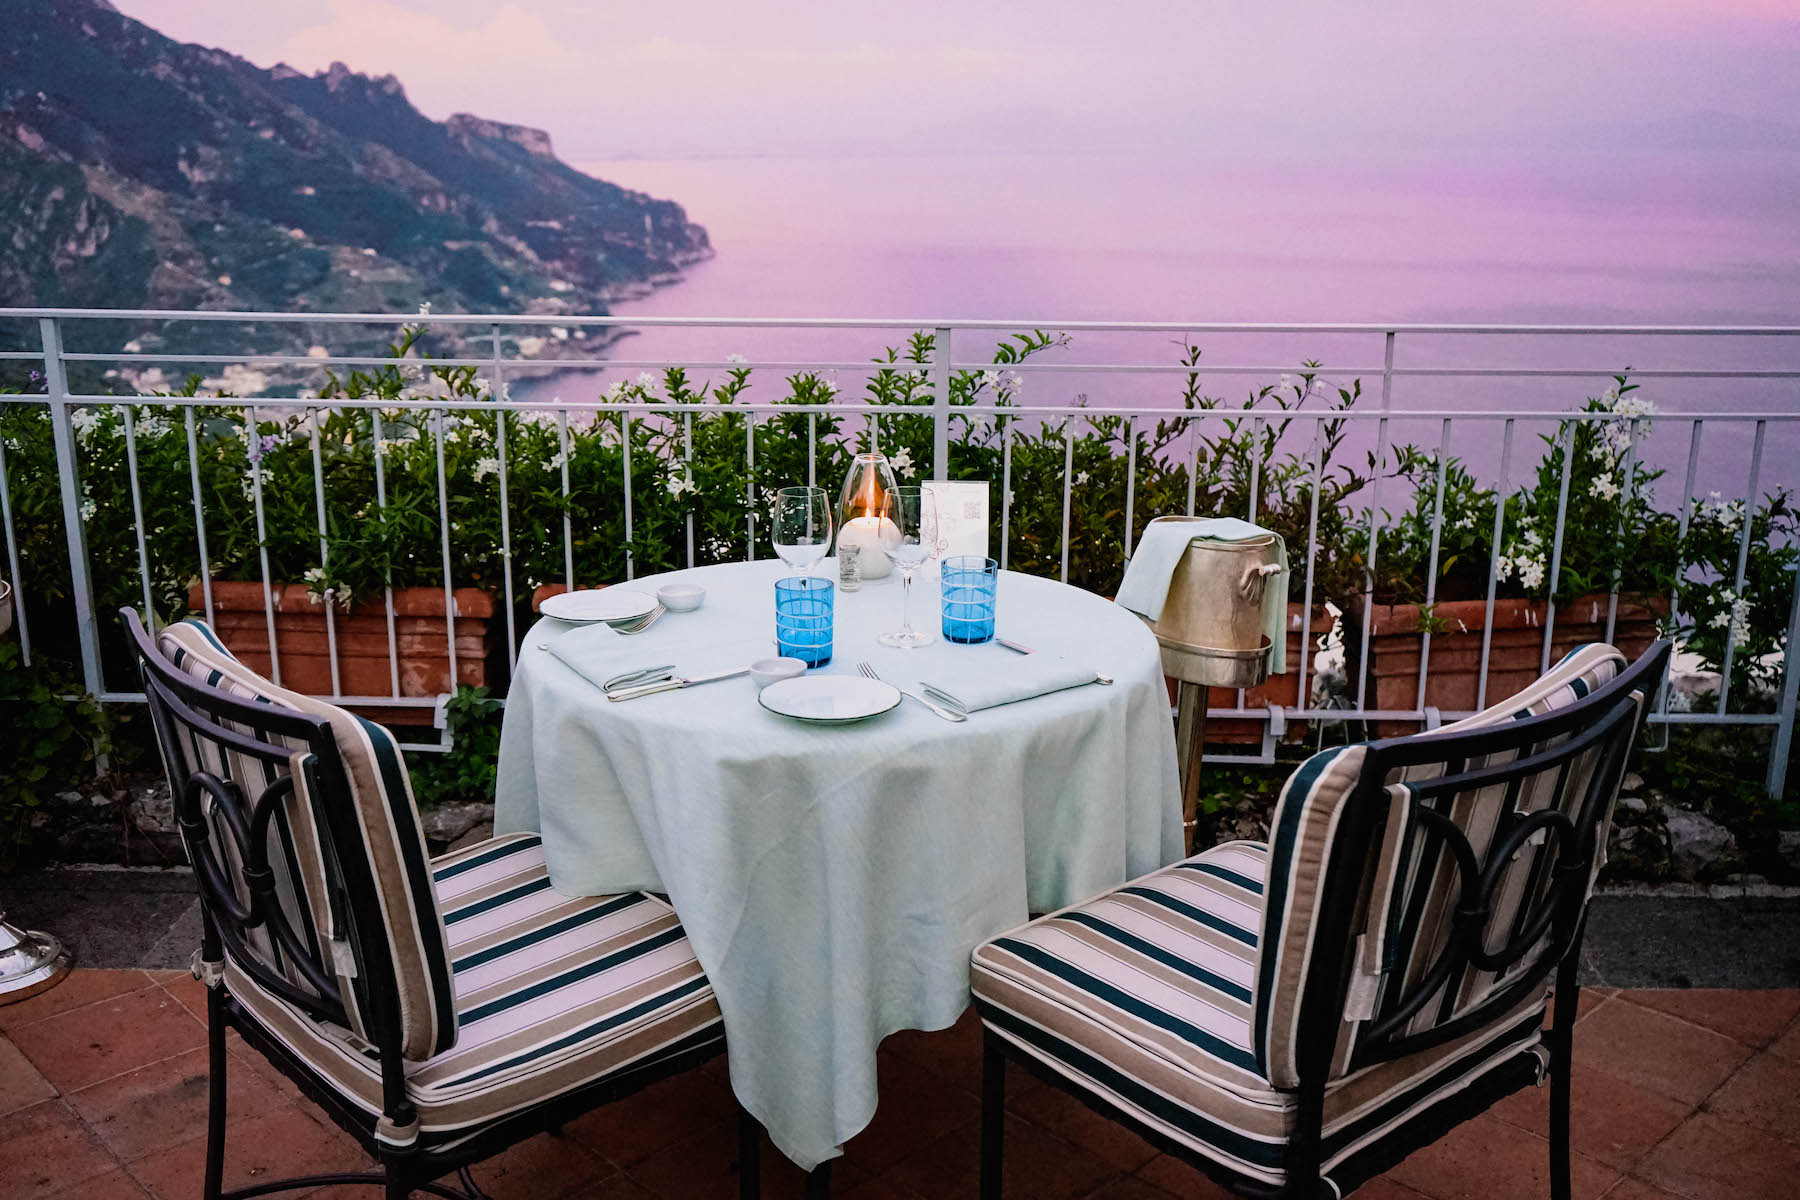 Belmond Hotel Caruso, Hotels in The Amalfi Coast